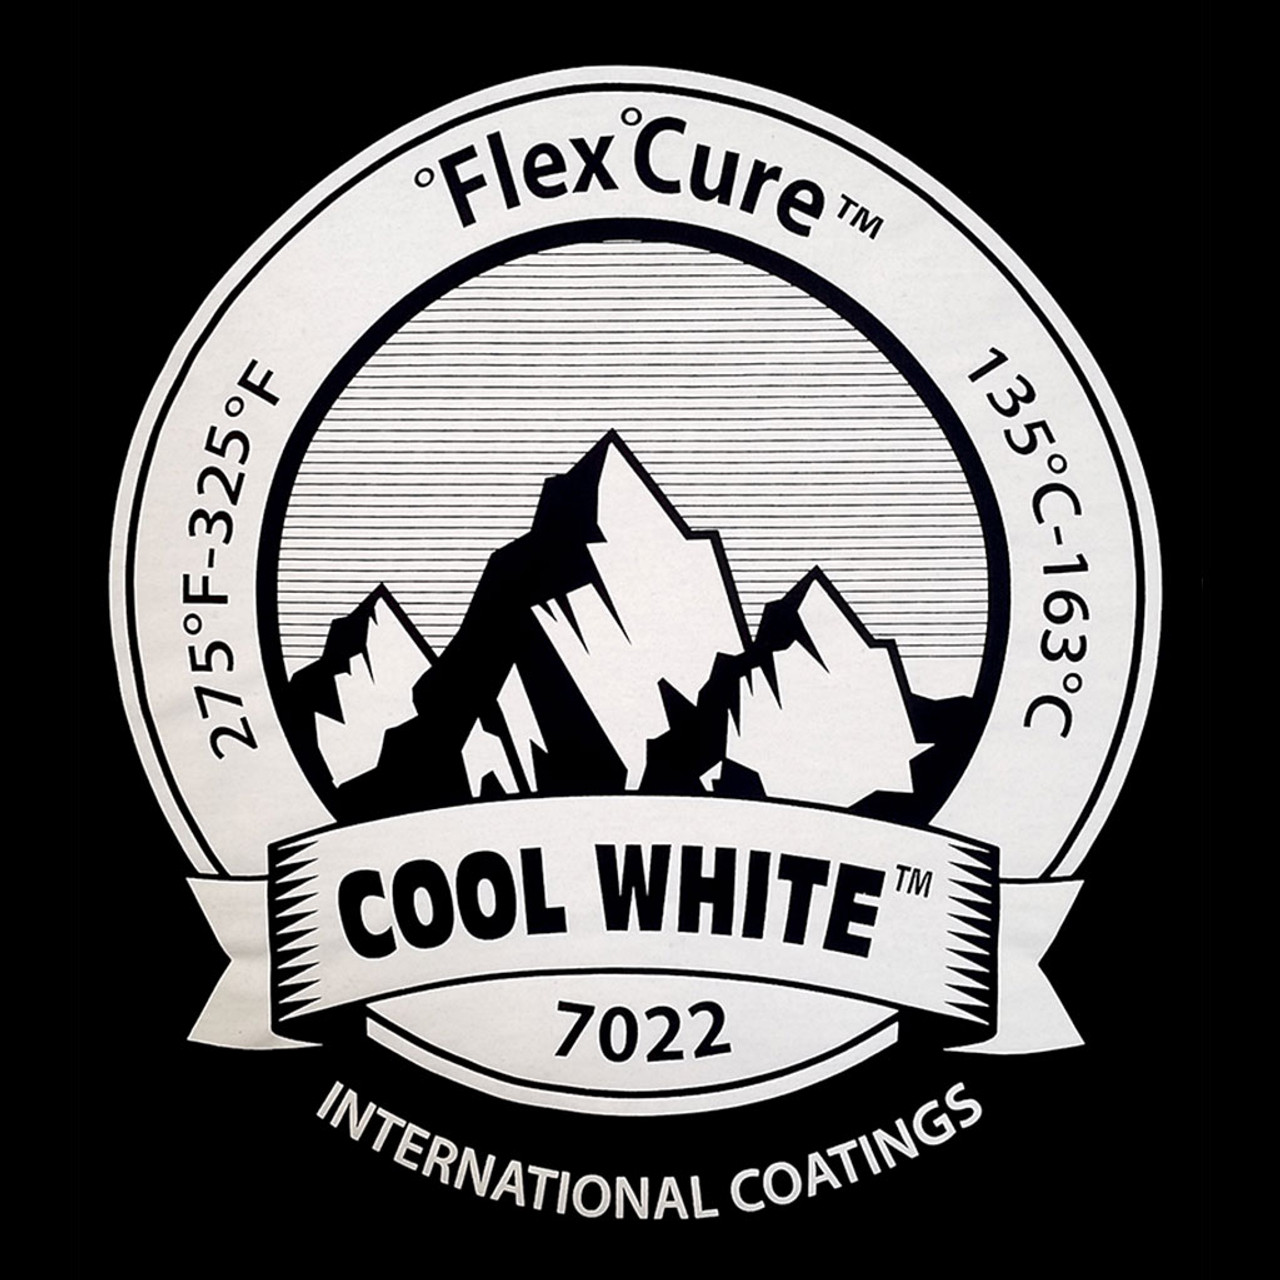 Cool White™ - 7022 - International Coatings